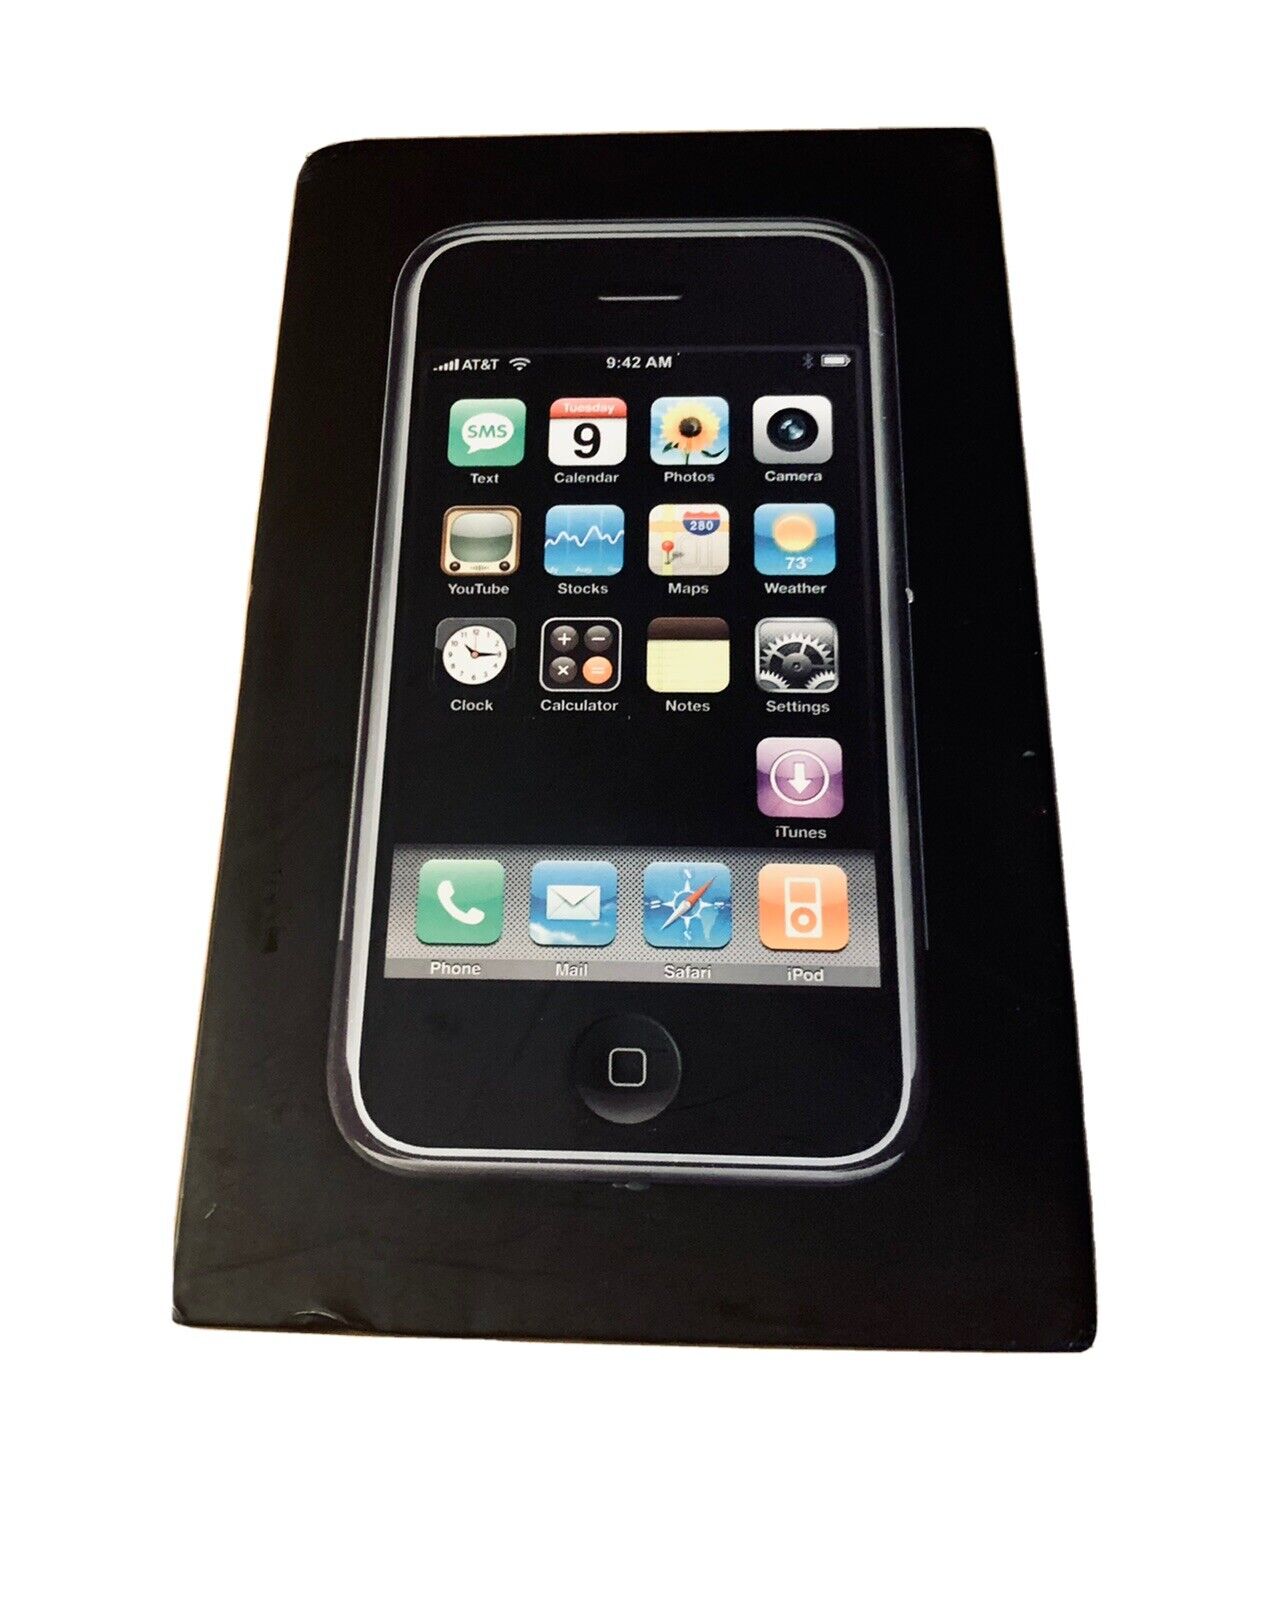 Apple iPhone 1st generation original-all original packaging and